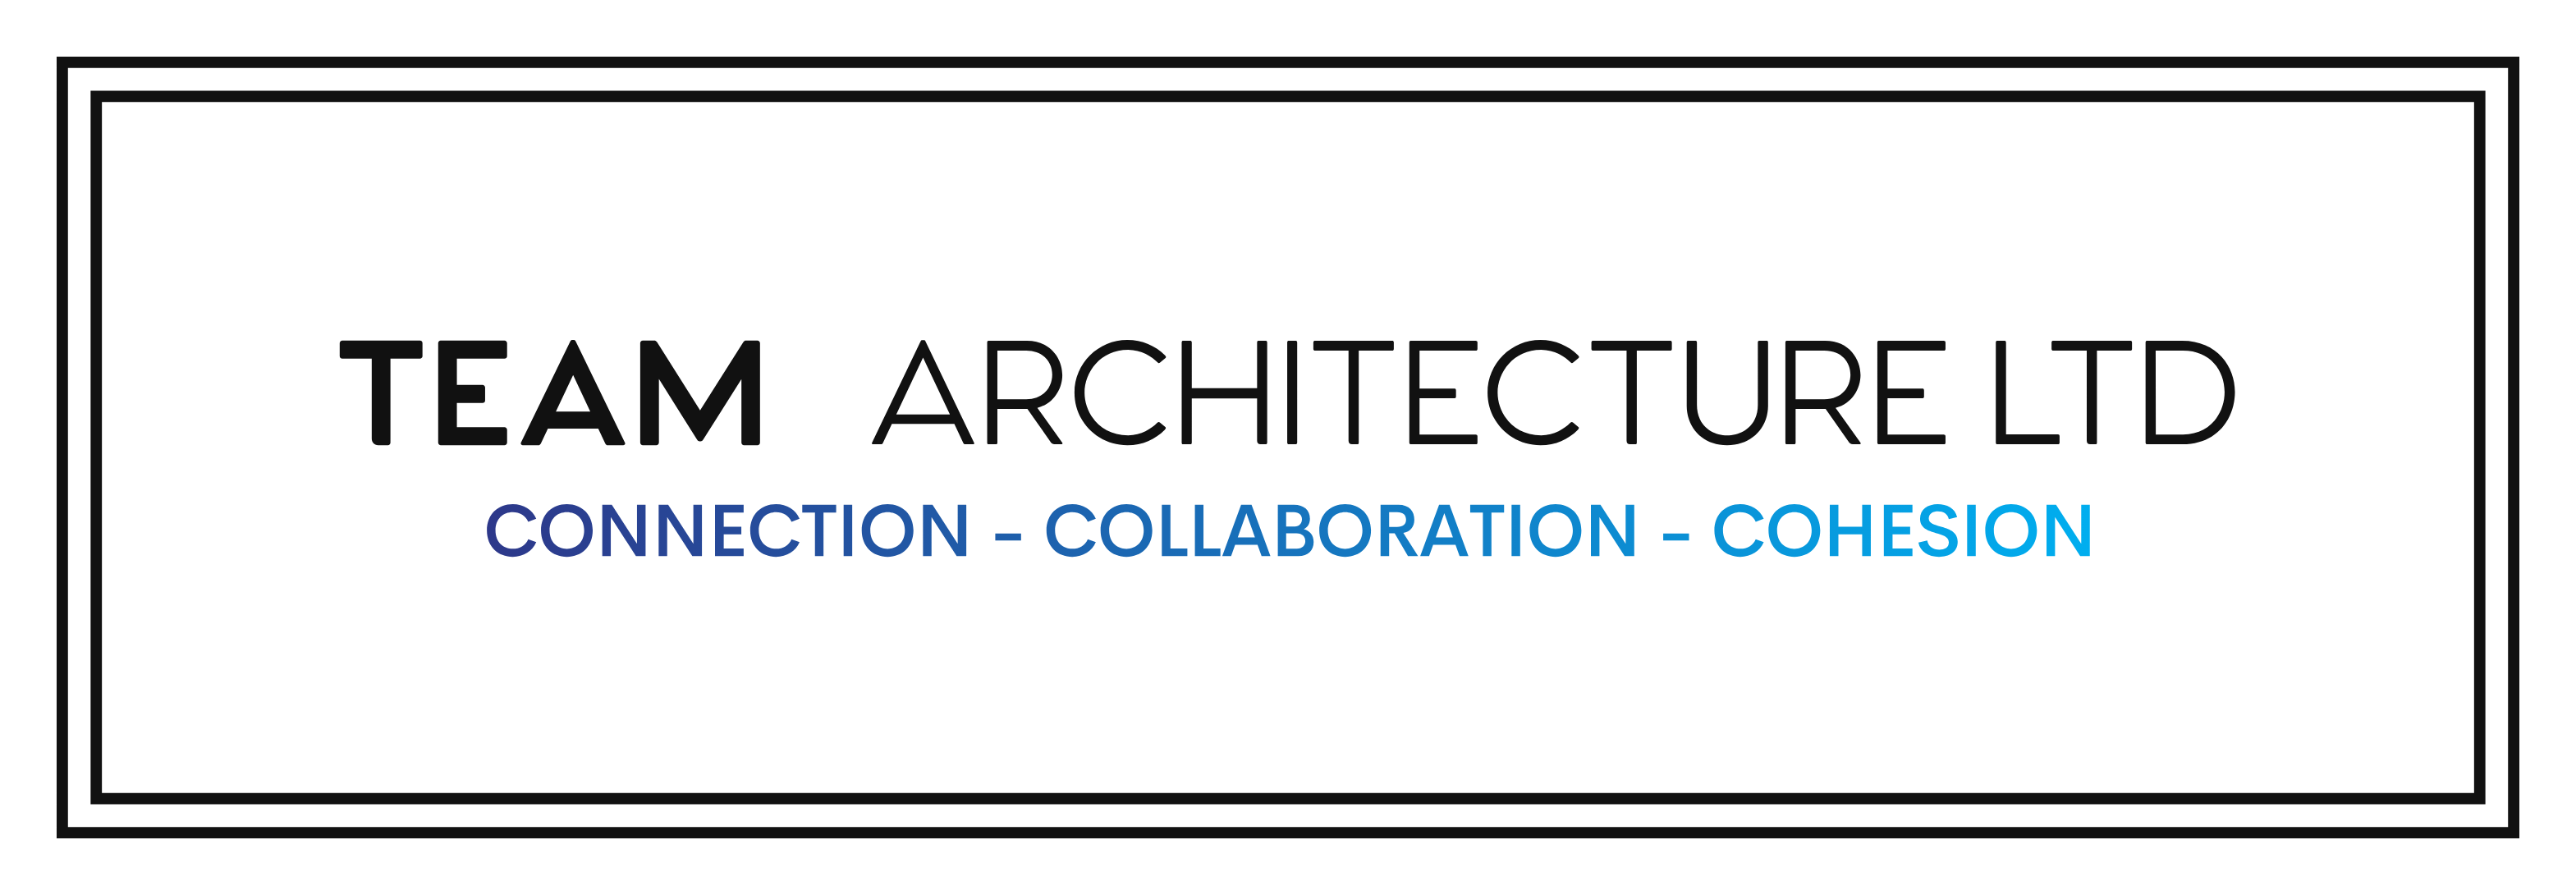 Team Architecture Ltd